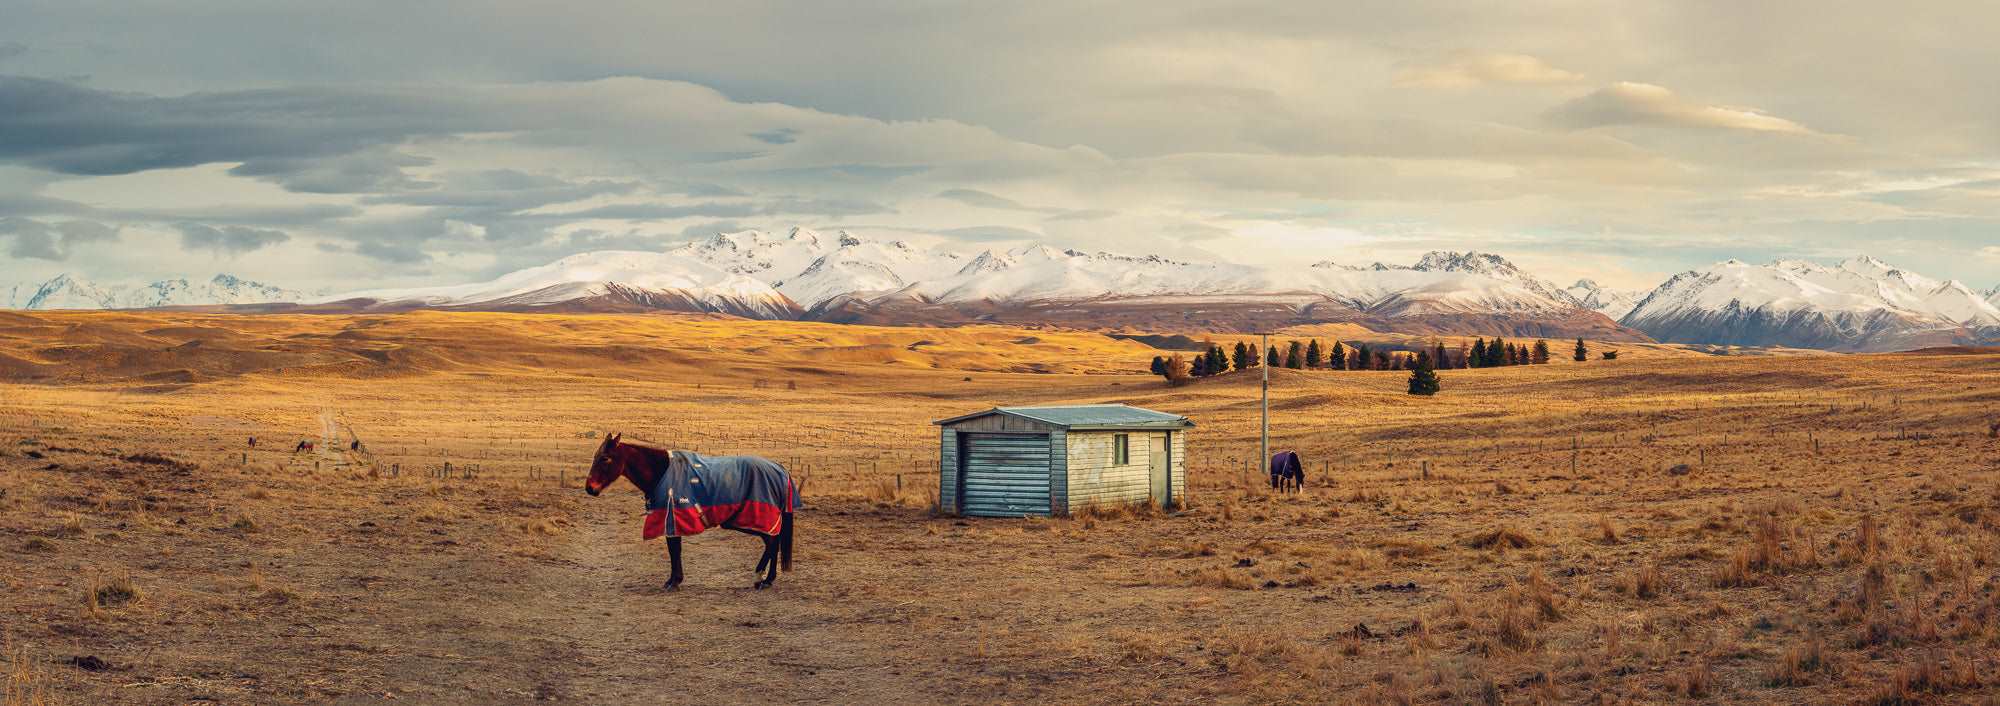 Ethereal Morning: Ben Ohau's Awakening - by Award Winning New Zealand Landscape Photographer Stephen Milner